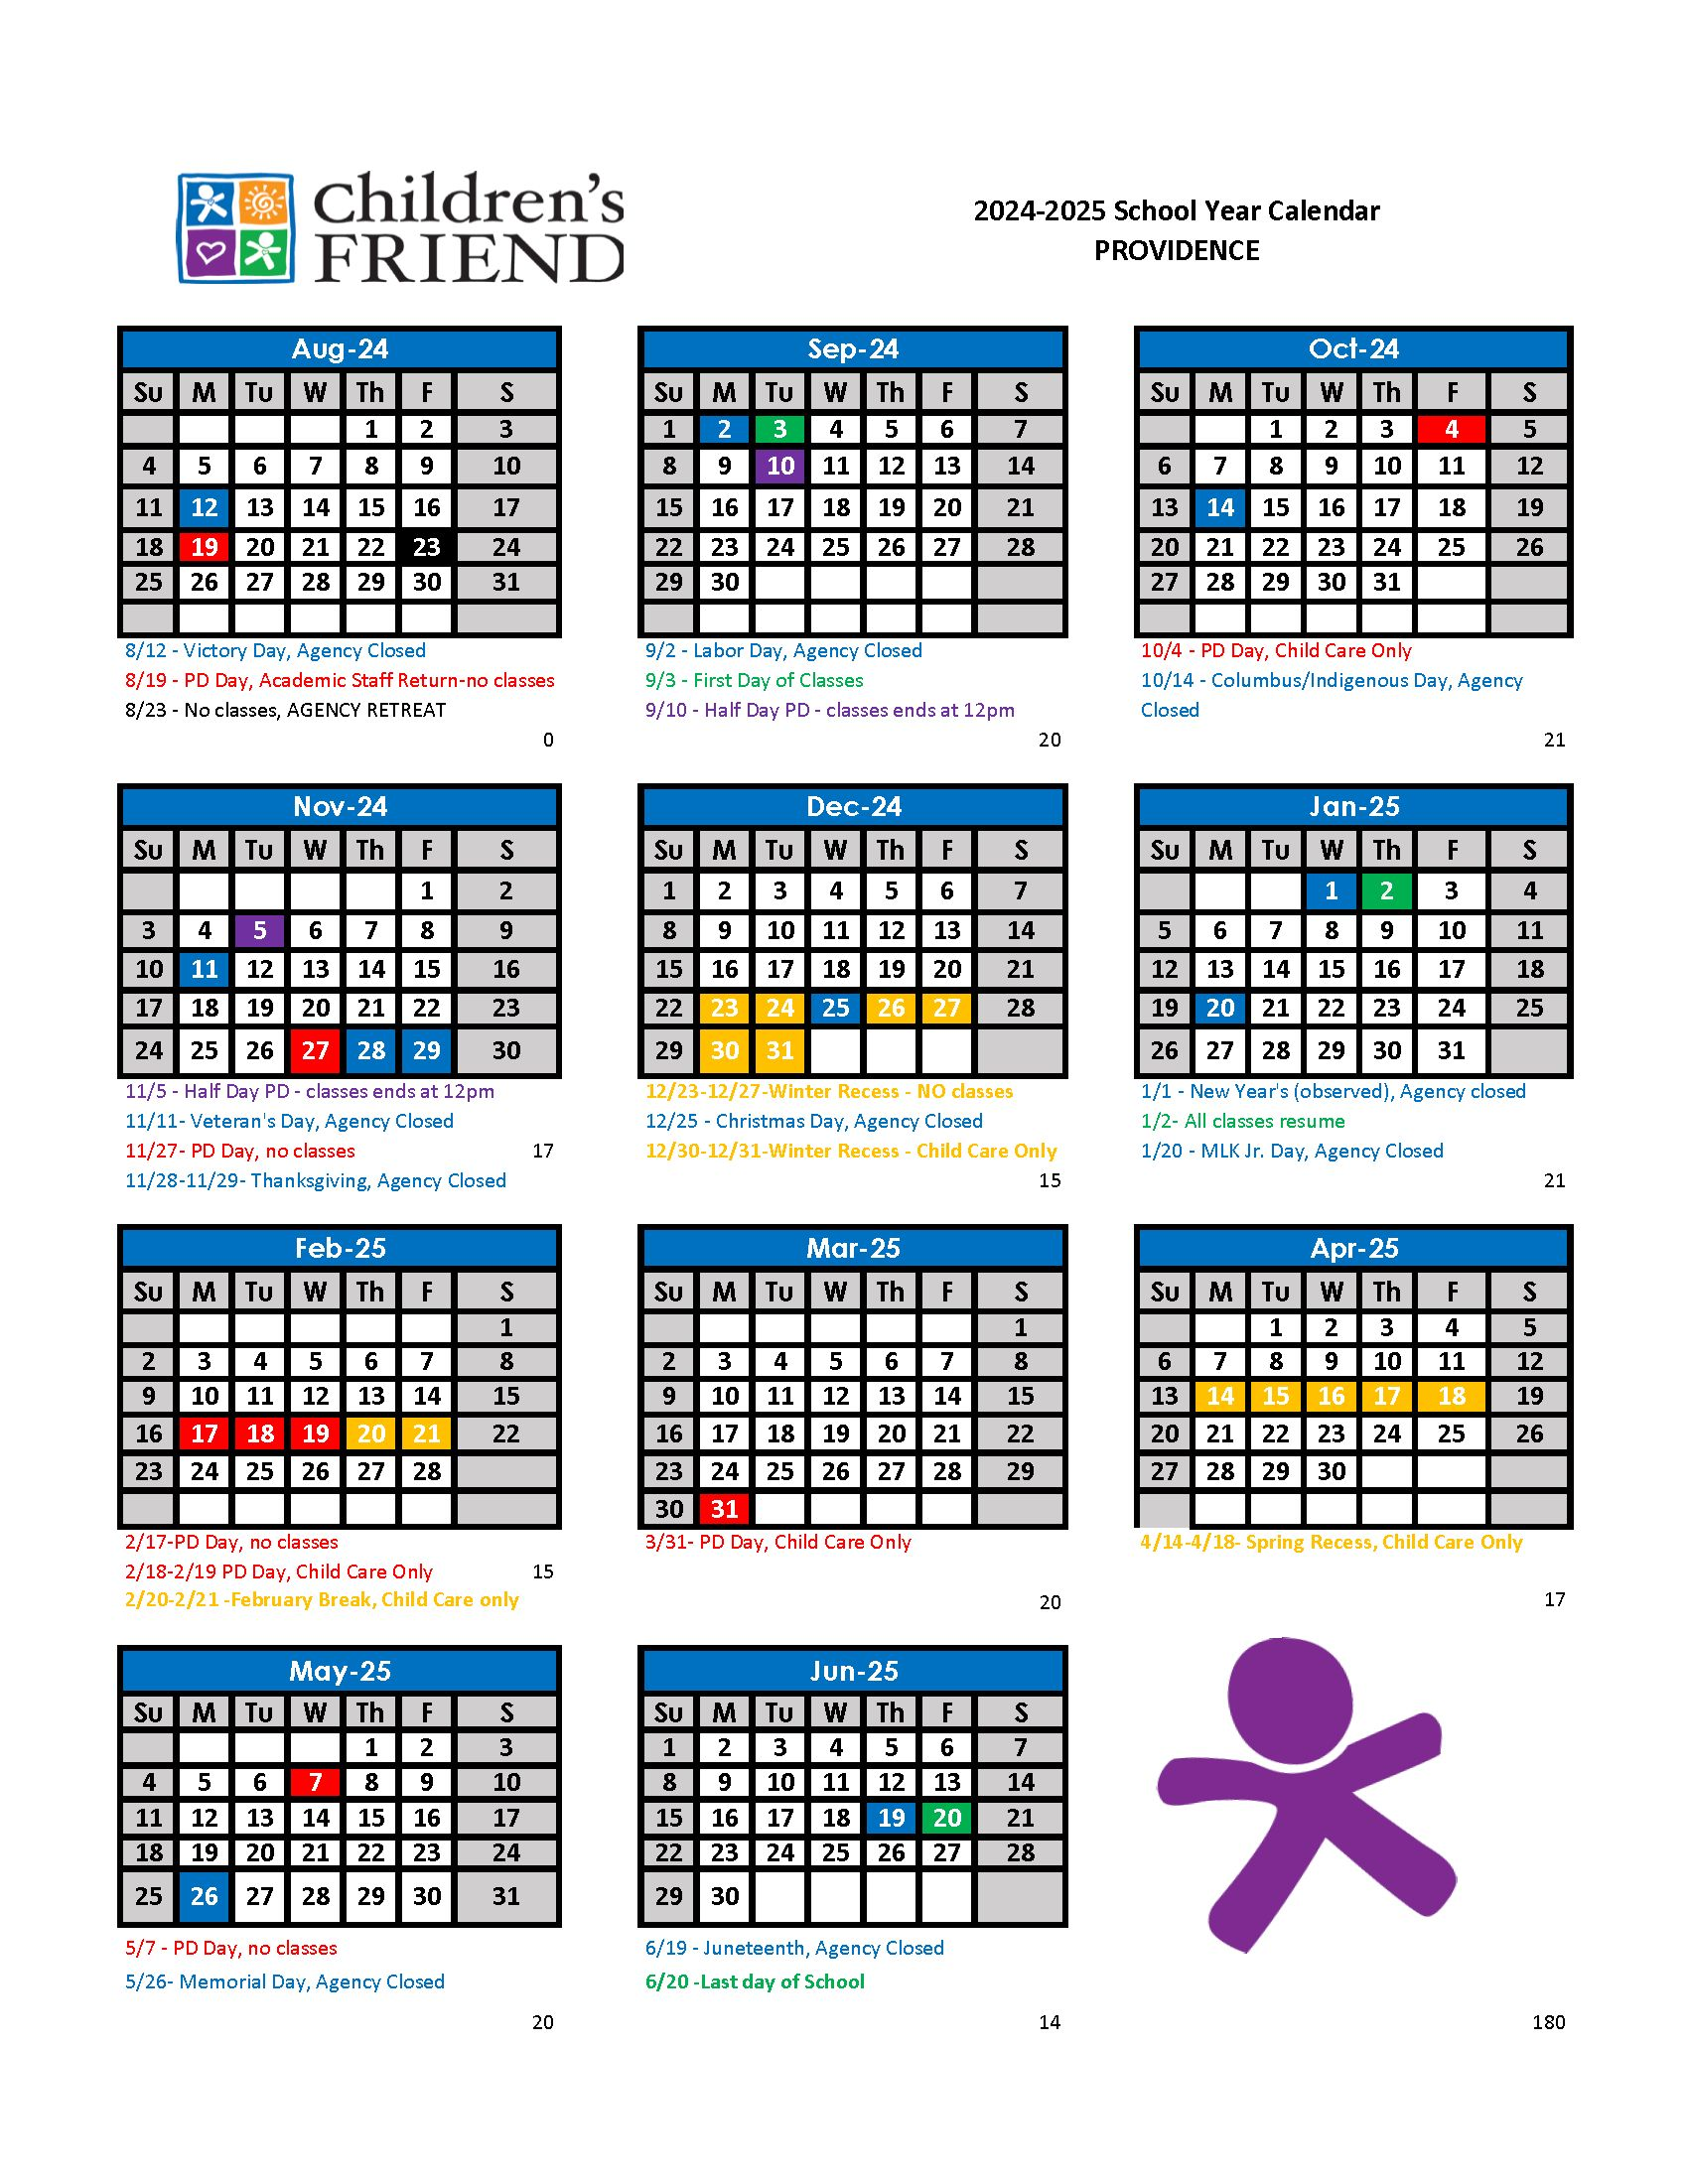 Providence - Head Start, Child Care and Pre-K Calendar